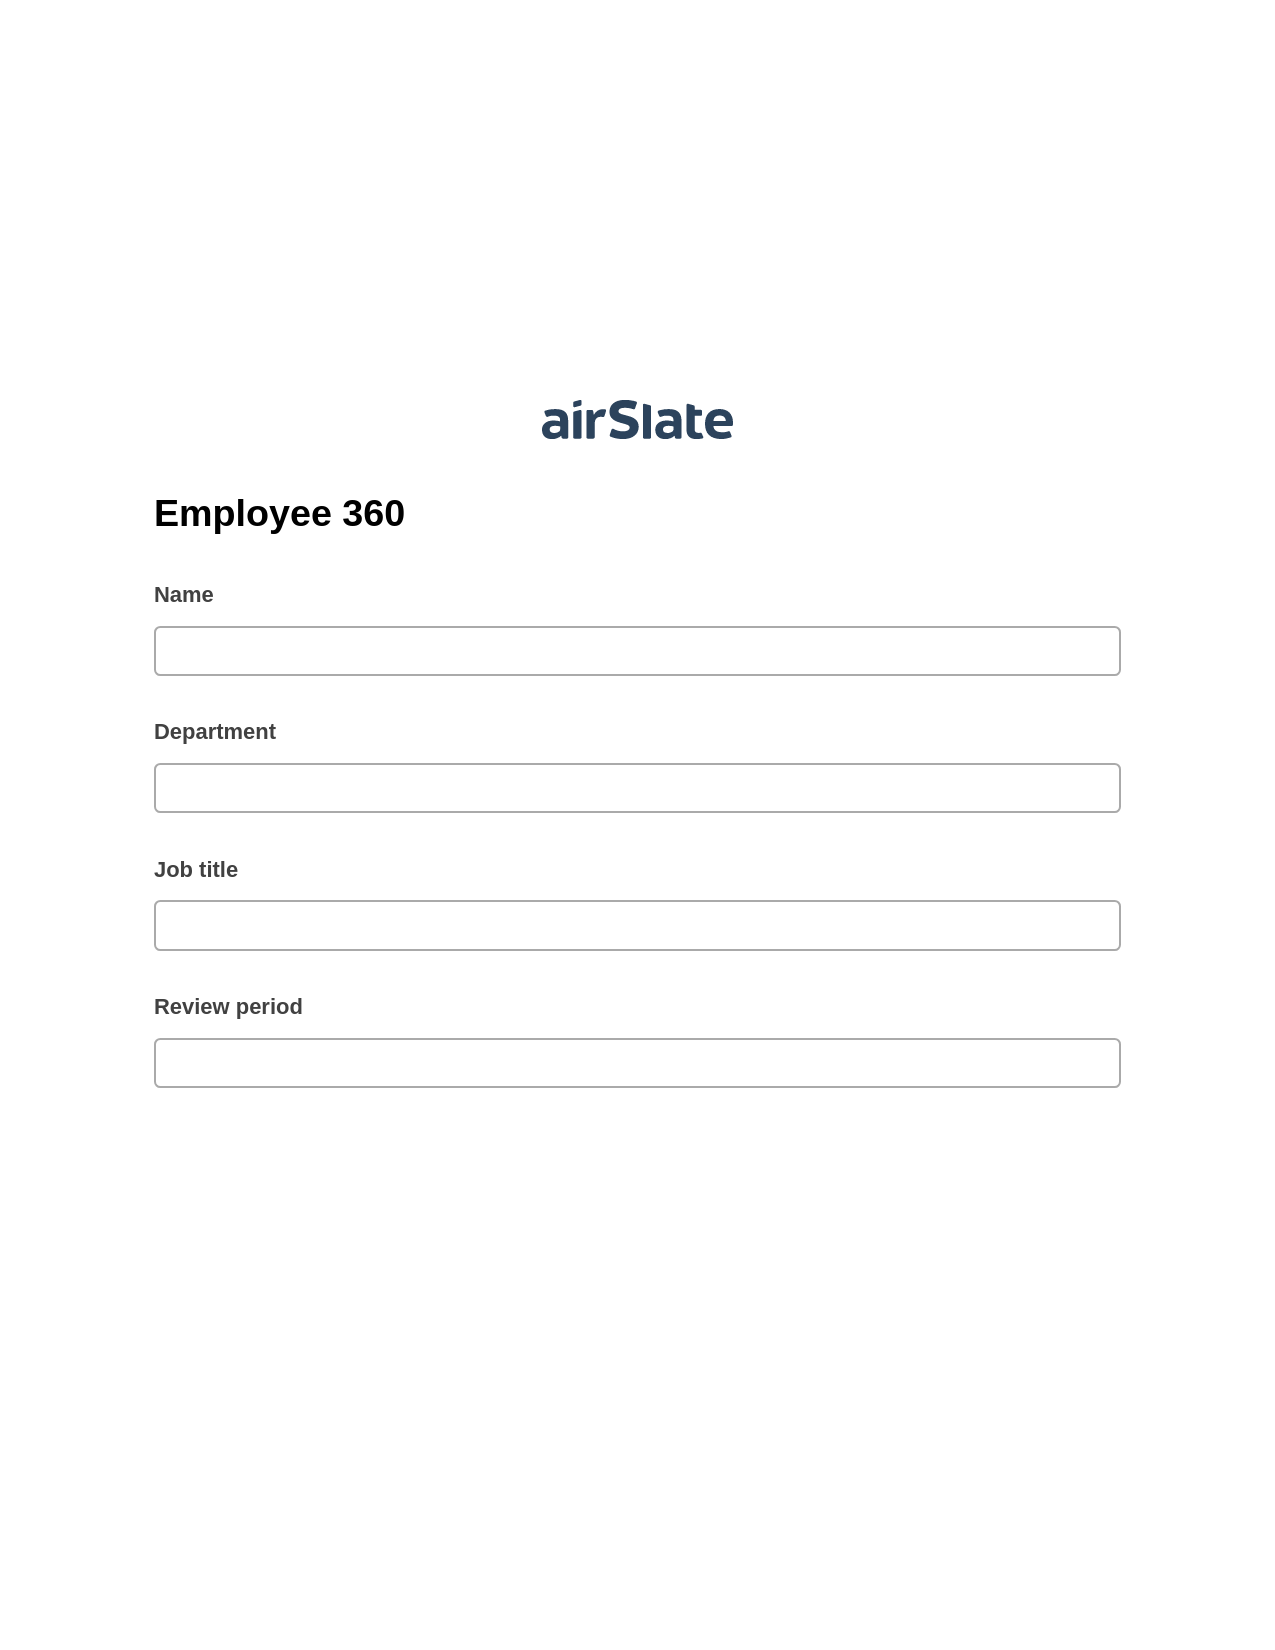 Employee 360 Pre-fill from CSV File Bot, Invoke Salesforce Process Bot, Archive to Google Drive Bot